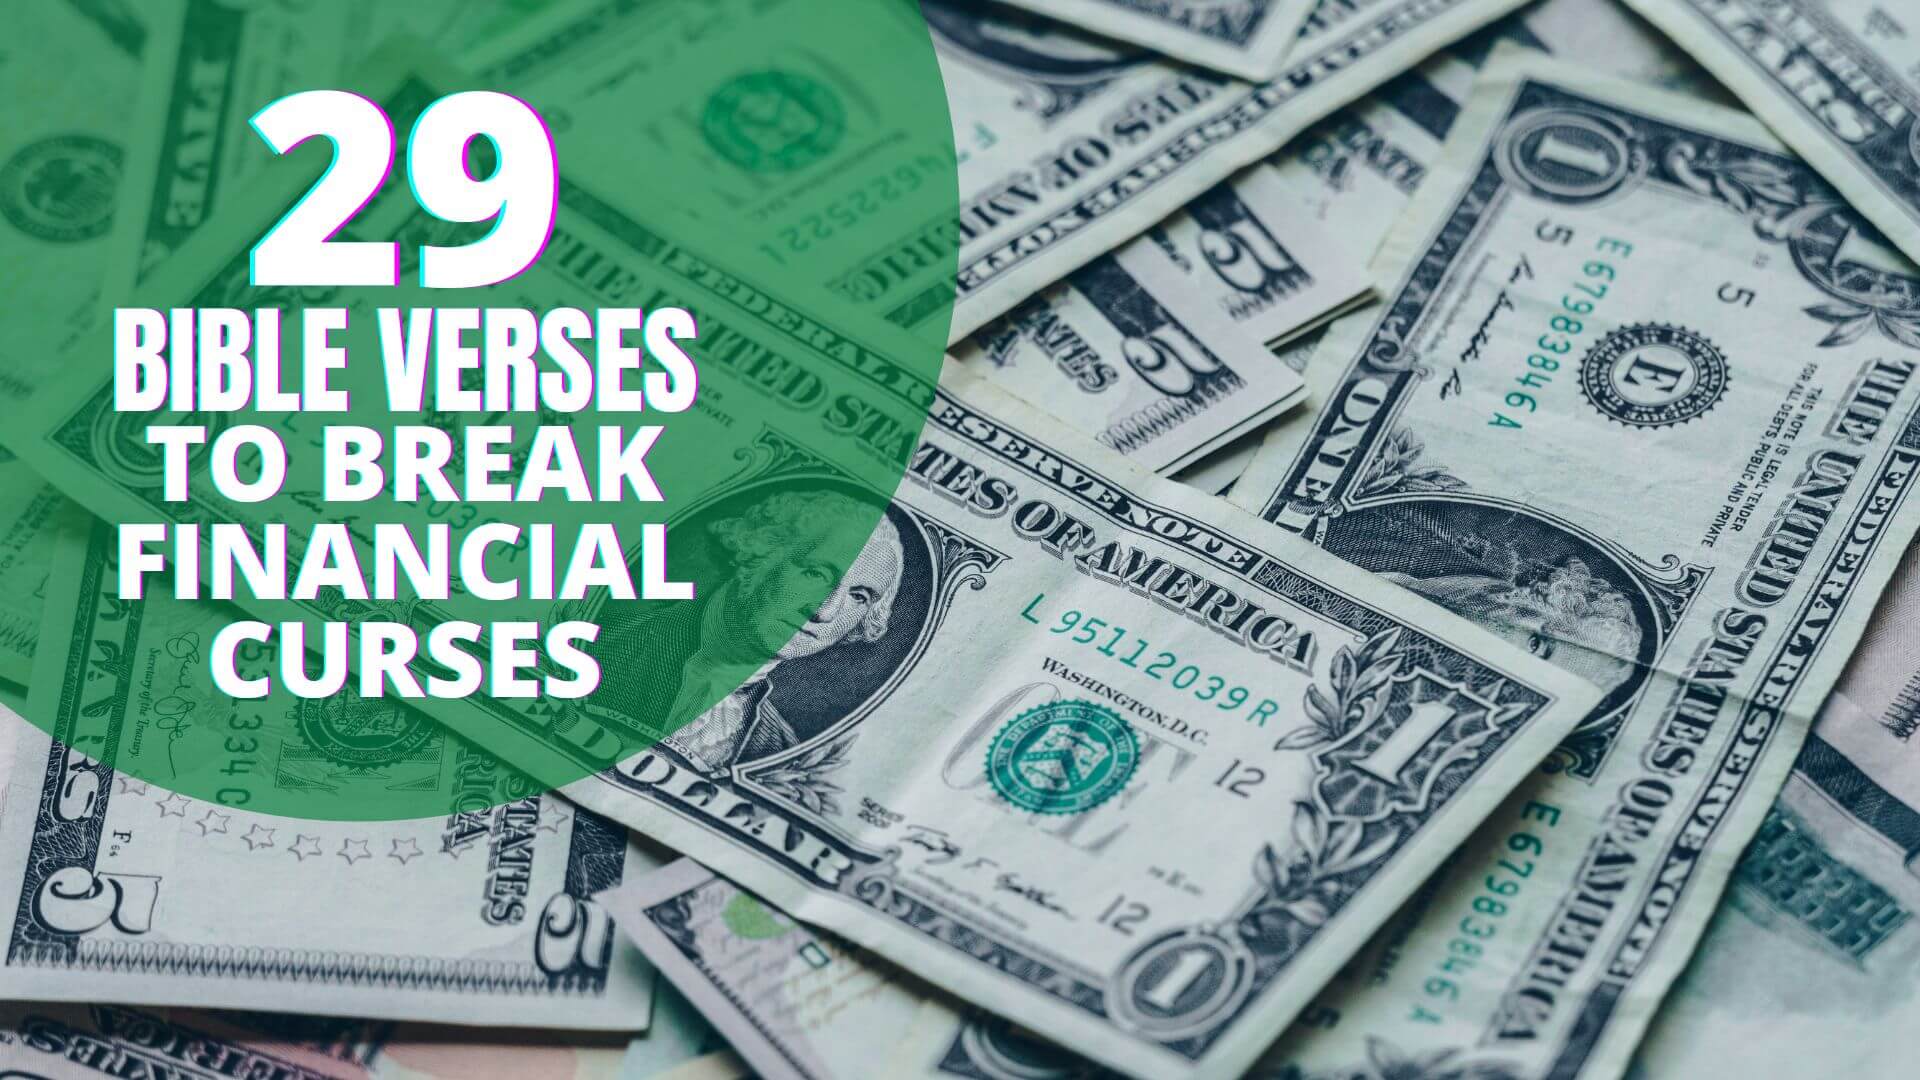 Bible verses to break financial curses